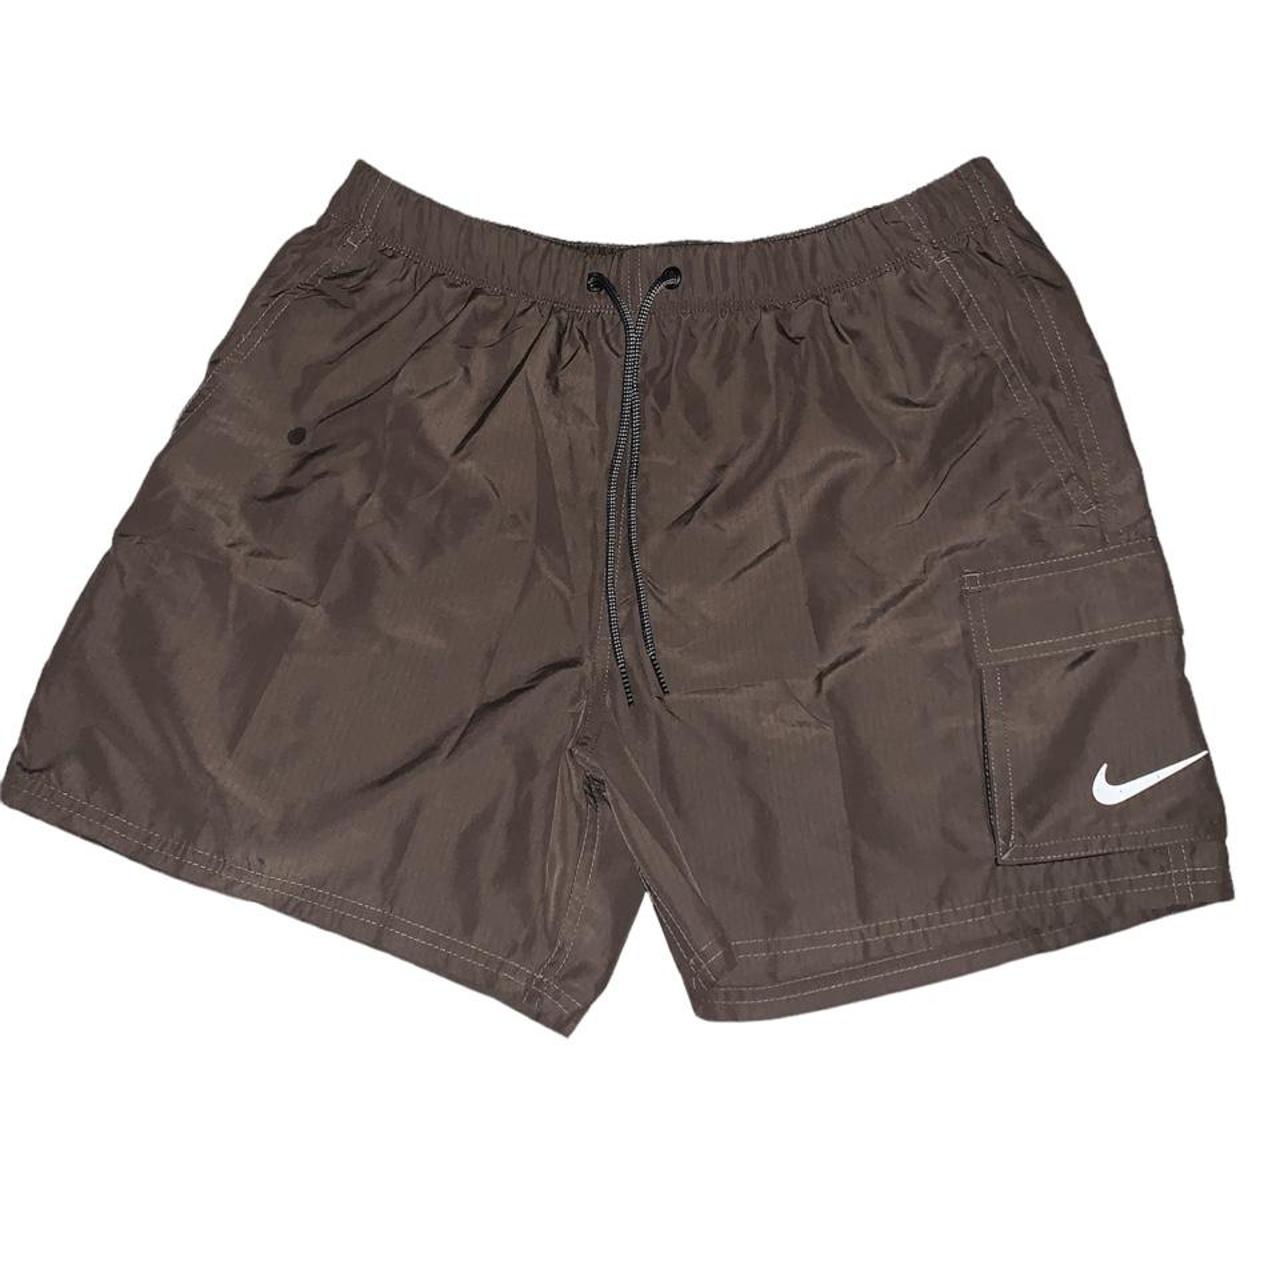 Nike Men's Brown Swim-briefs-shorts